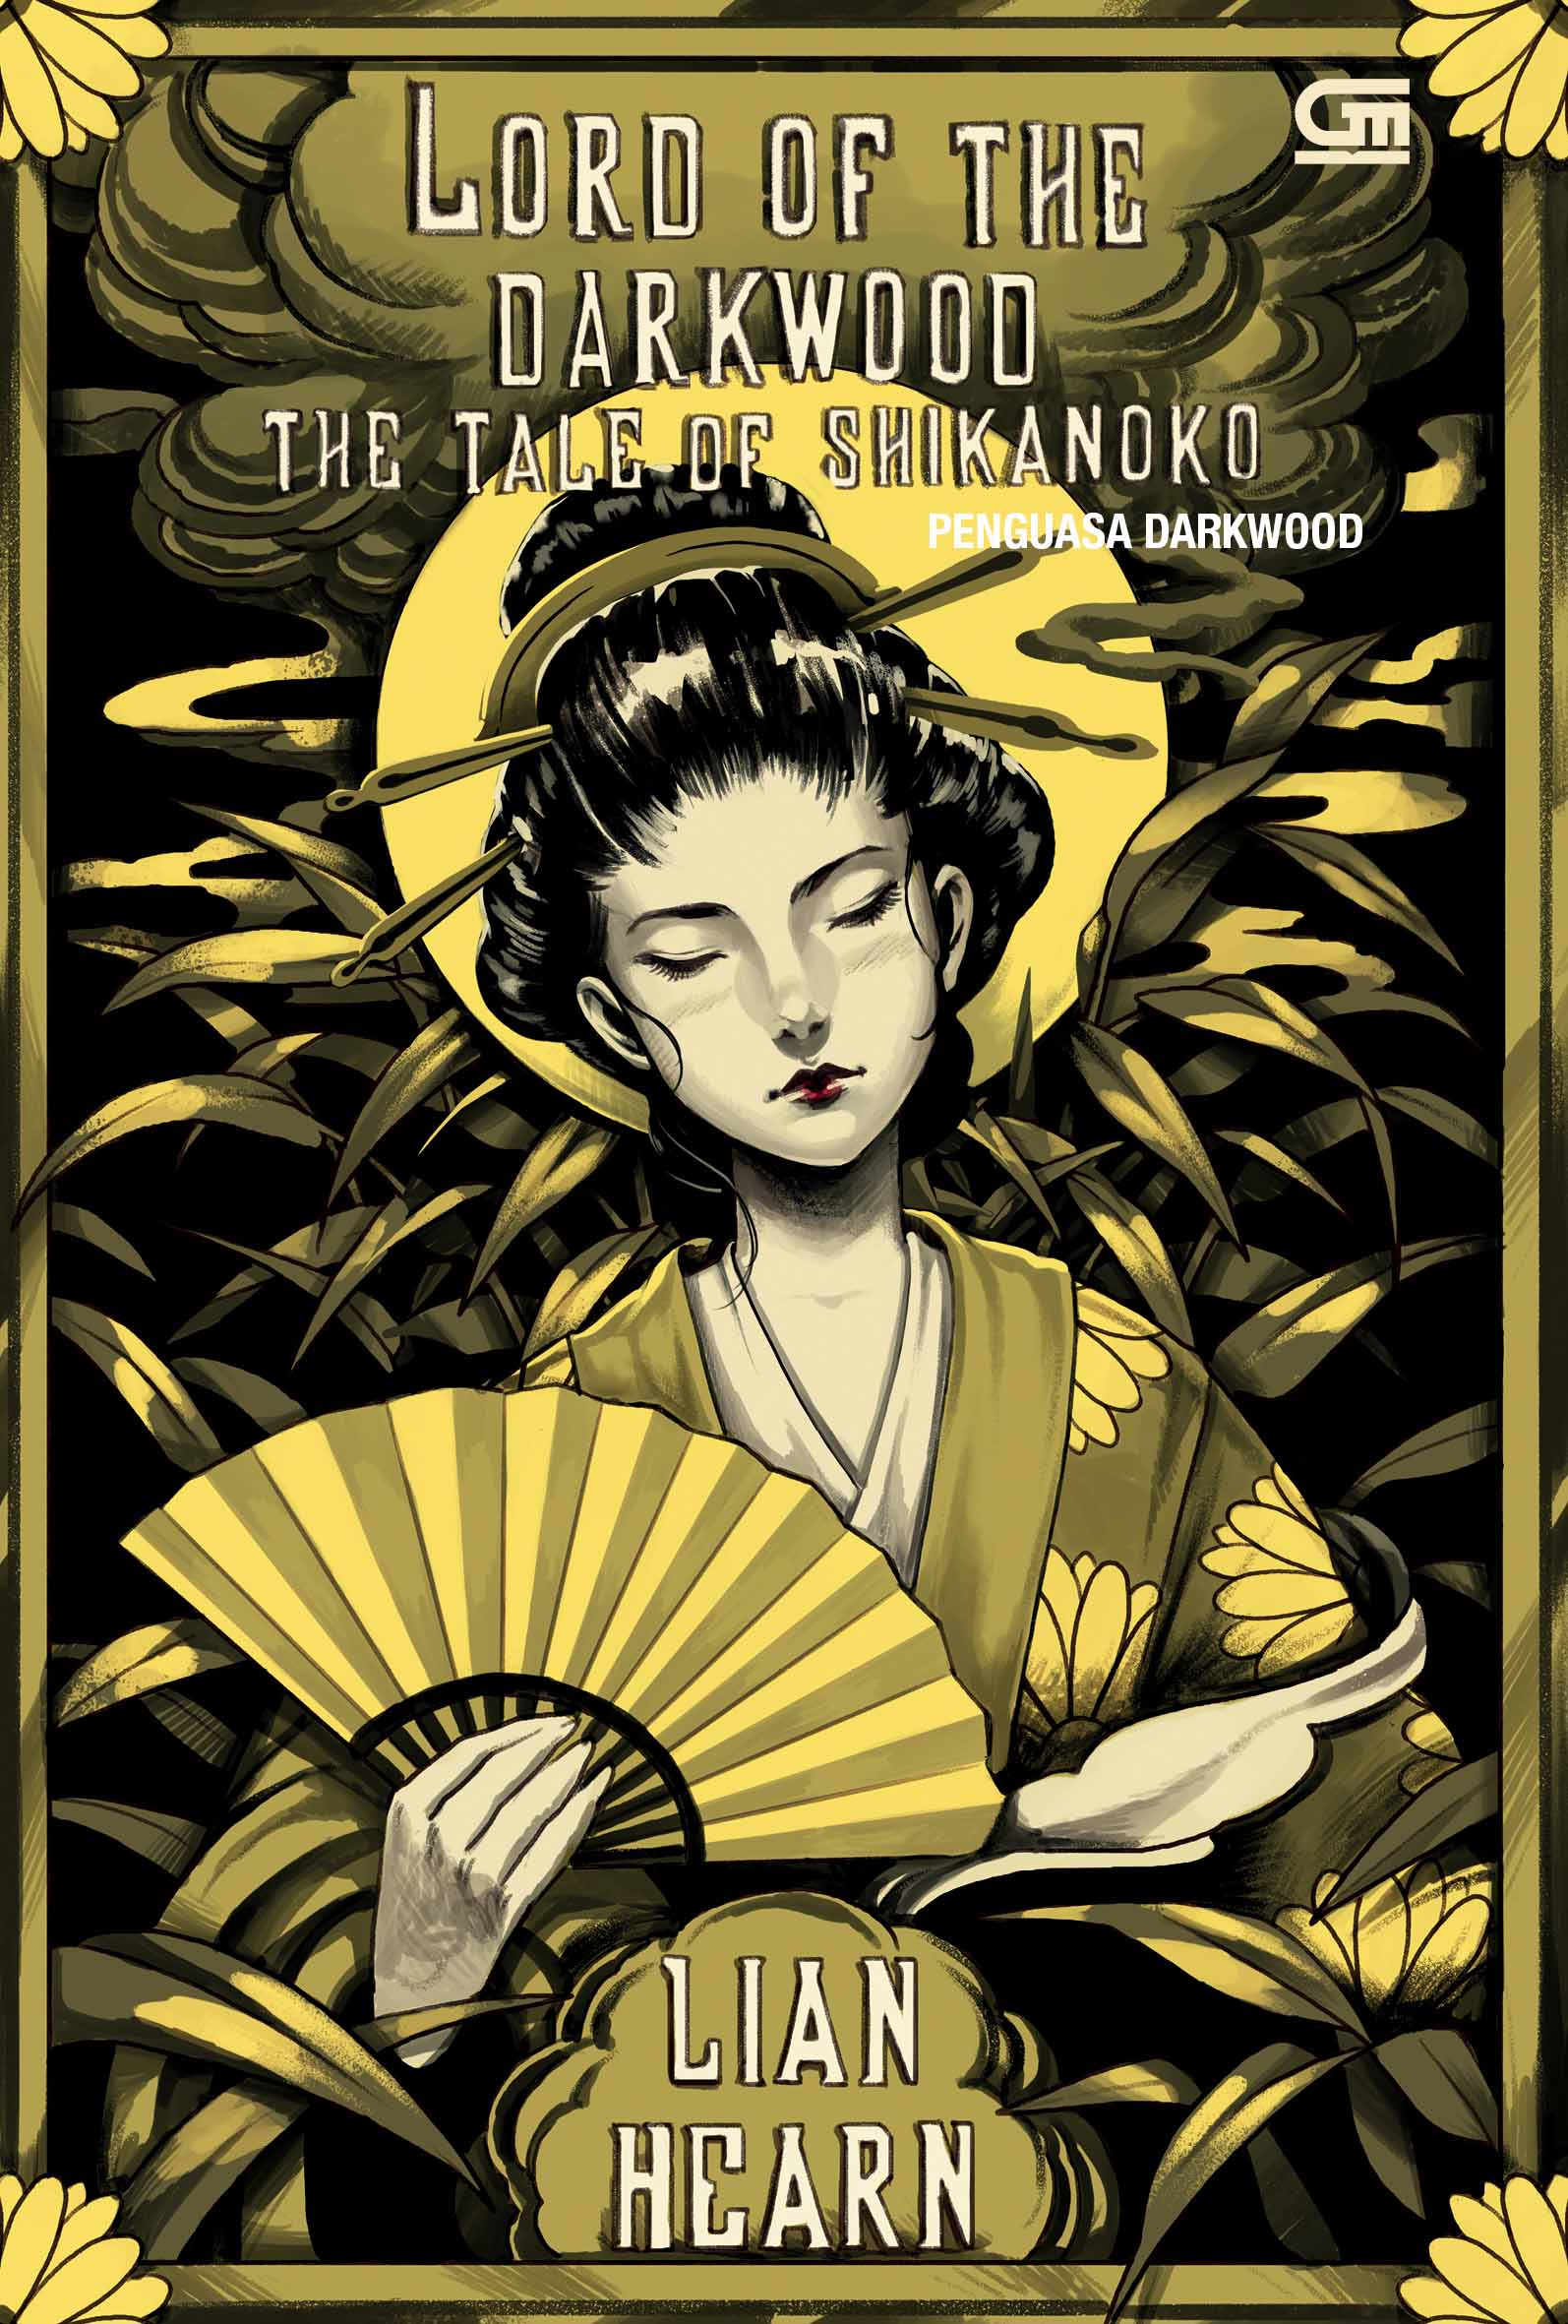 The Tale of Shikanoko #3: Penguasa Darkwood (Lord of the Darkwood)